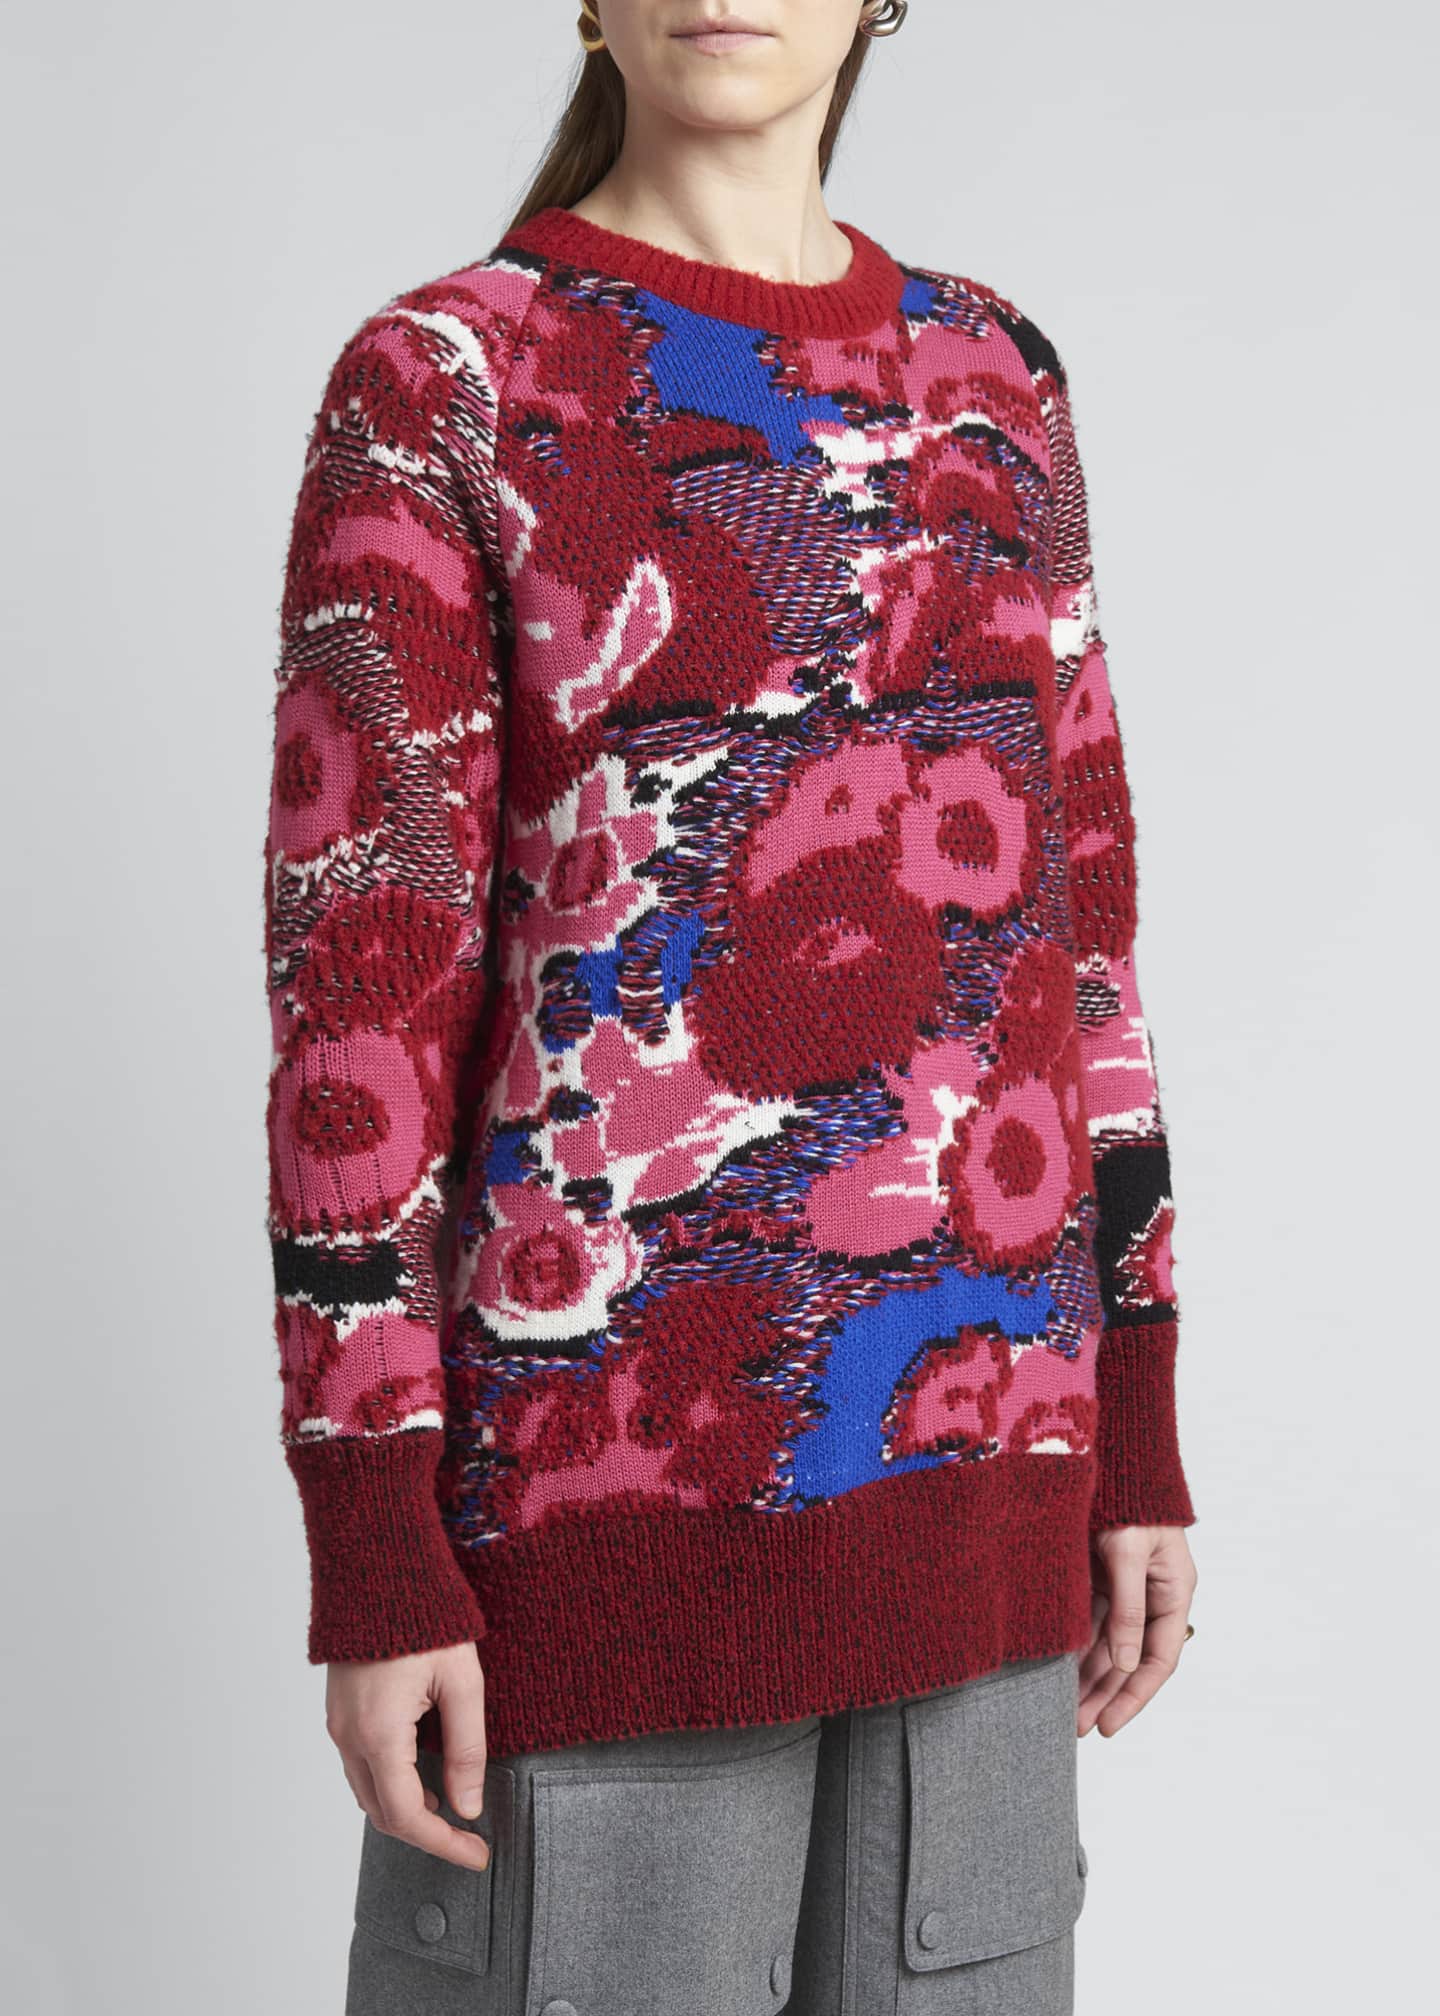 Stella McCartney Floral Jacquard Oversized Wool Sweater - Bergdorf Goodman